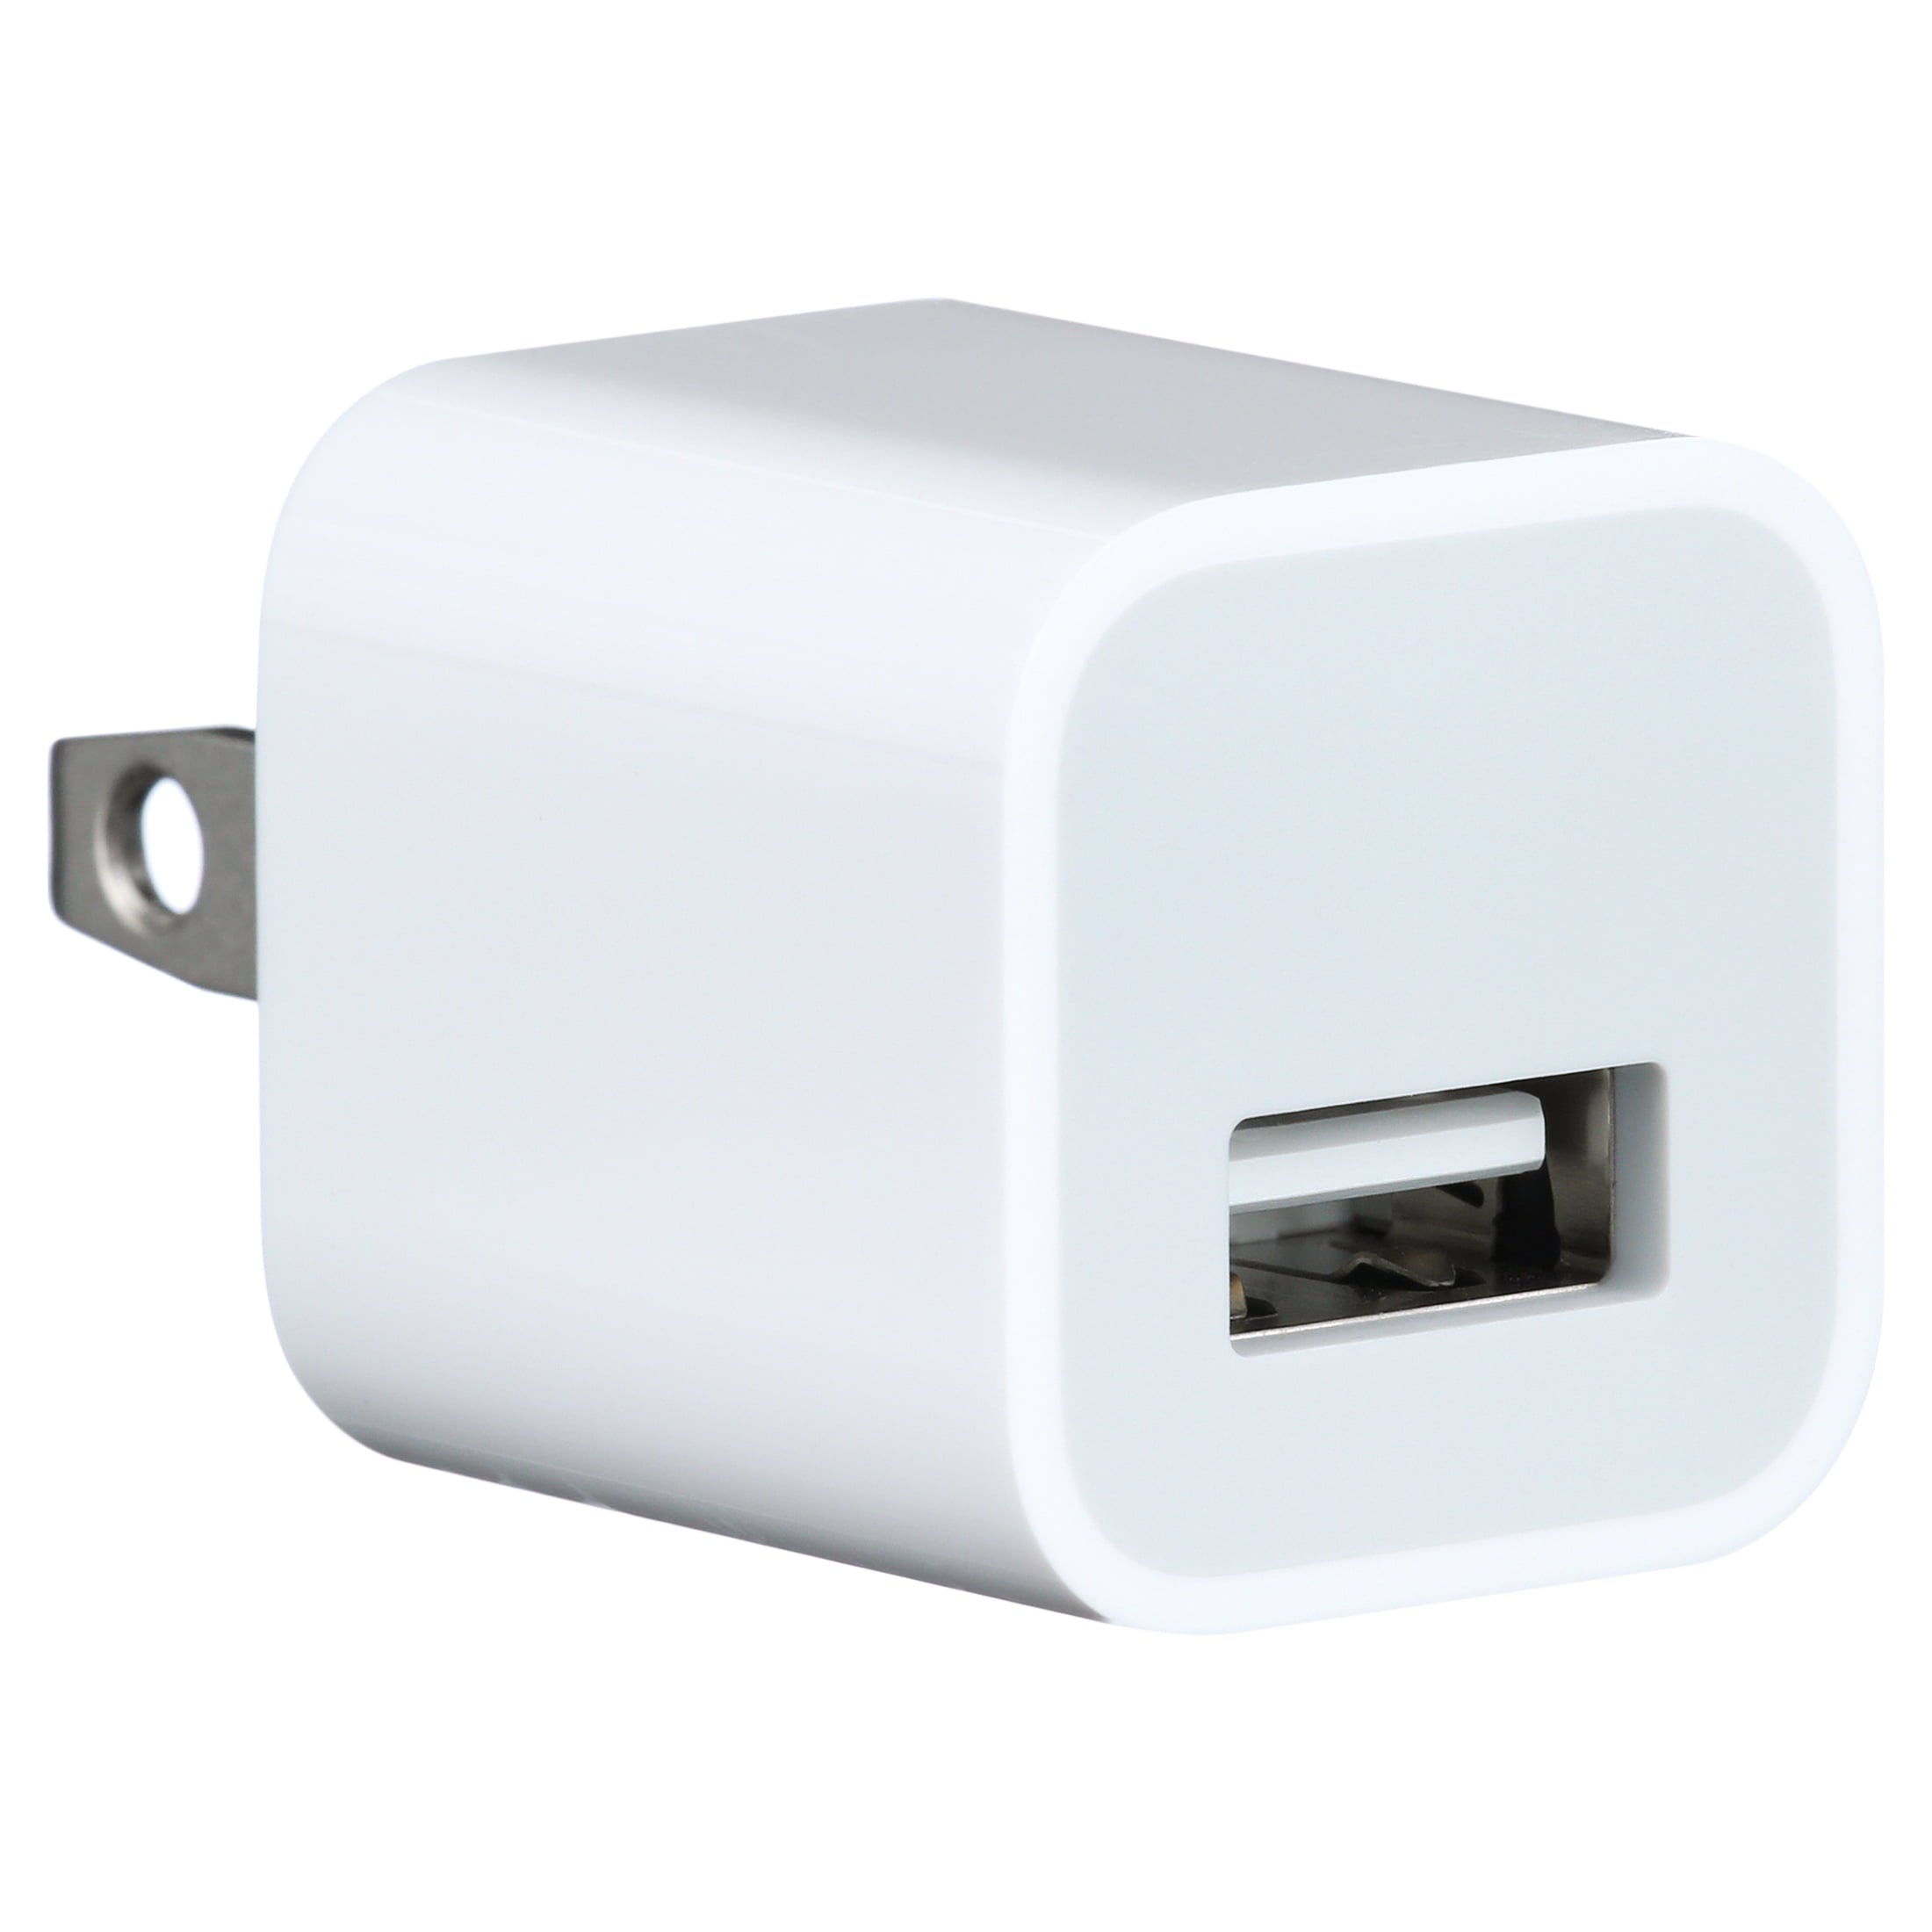 Apple 5W Power Adapter Retail